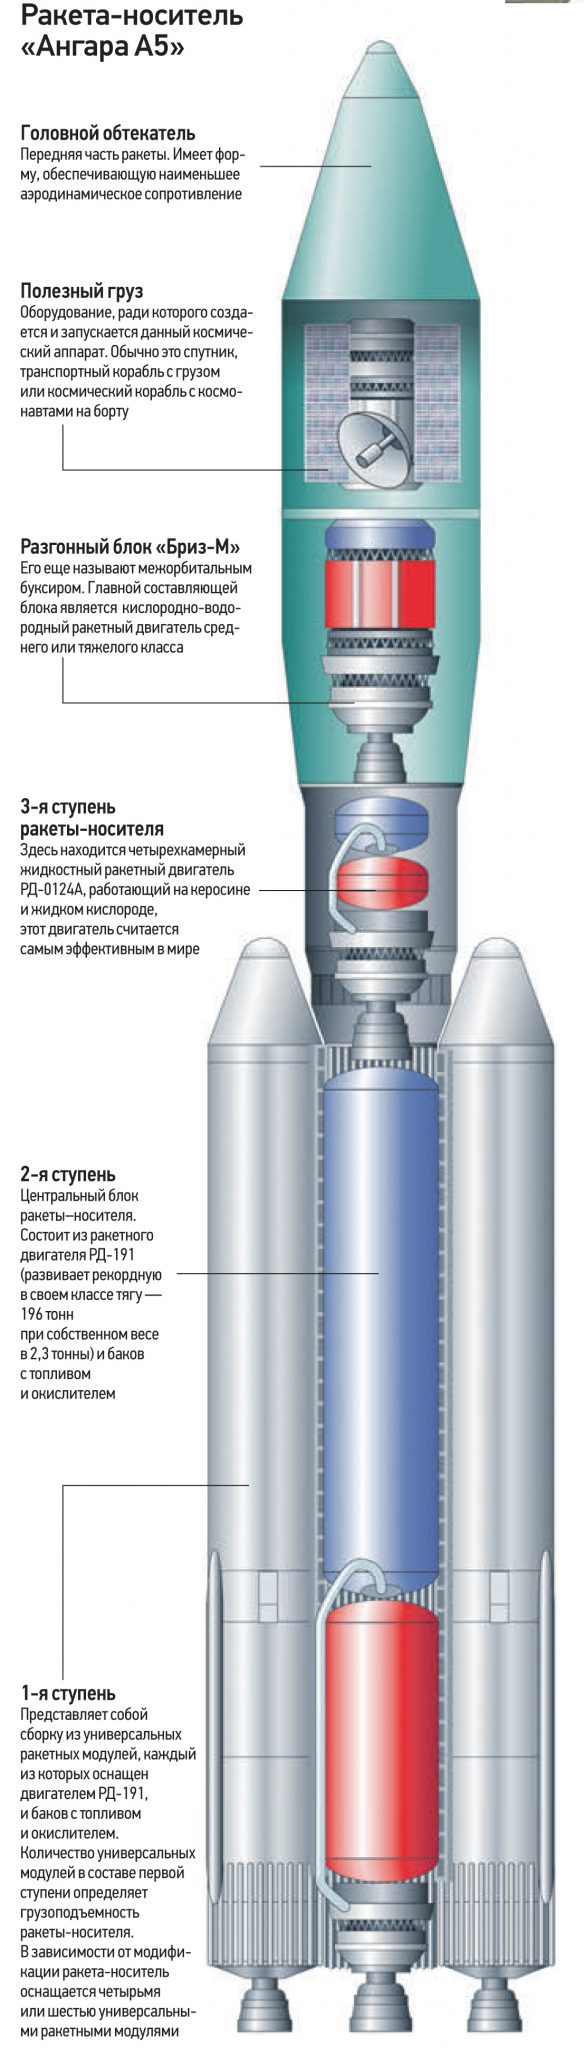 Ангара а5м. Ракета Ангара а5 чертеж. Ракеты Союз Протон Ангара. Ангара-а5 характеристики. Ангара а7 ракета носитель характеристики.